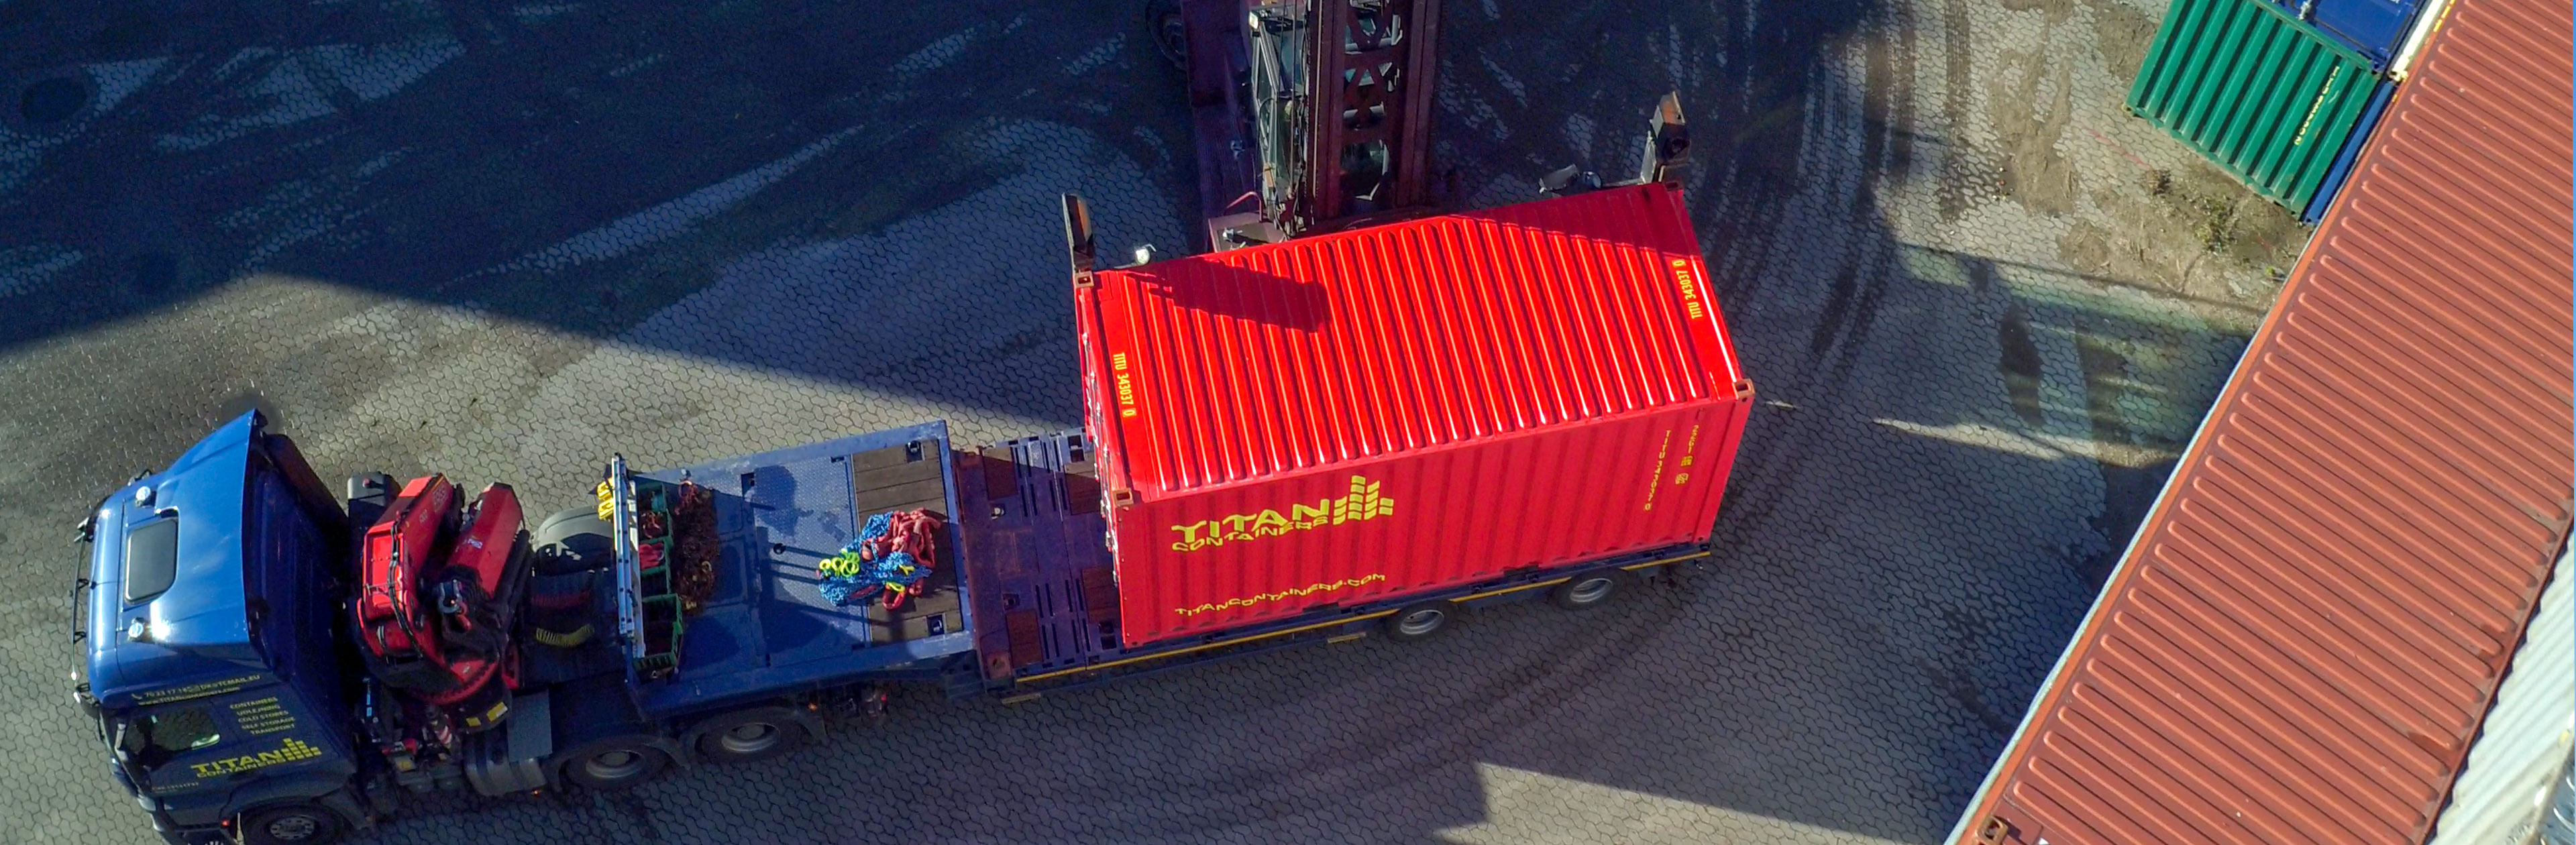 TITAN-vervoer - TITAN Containers